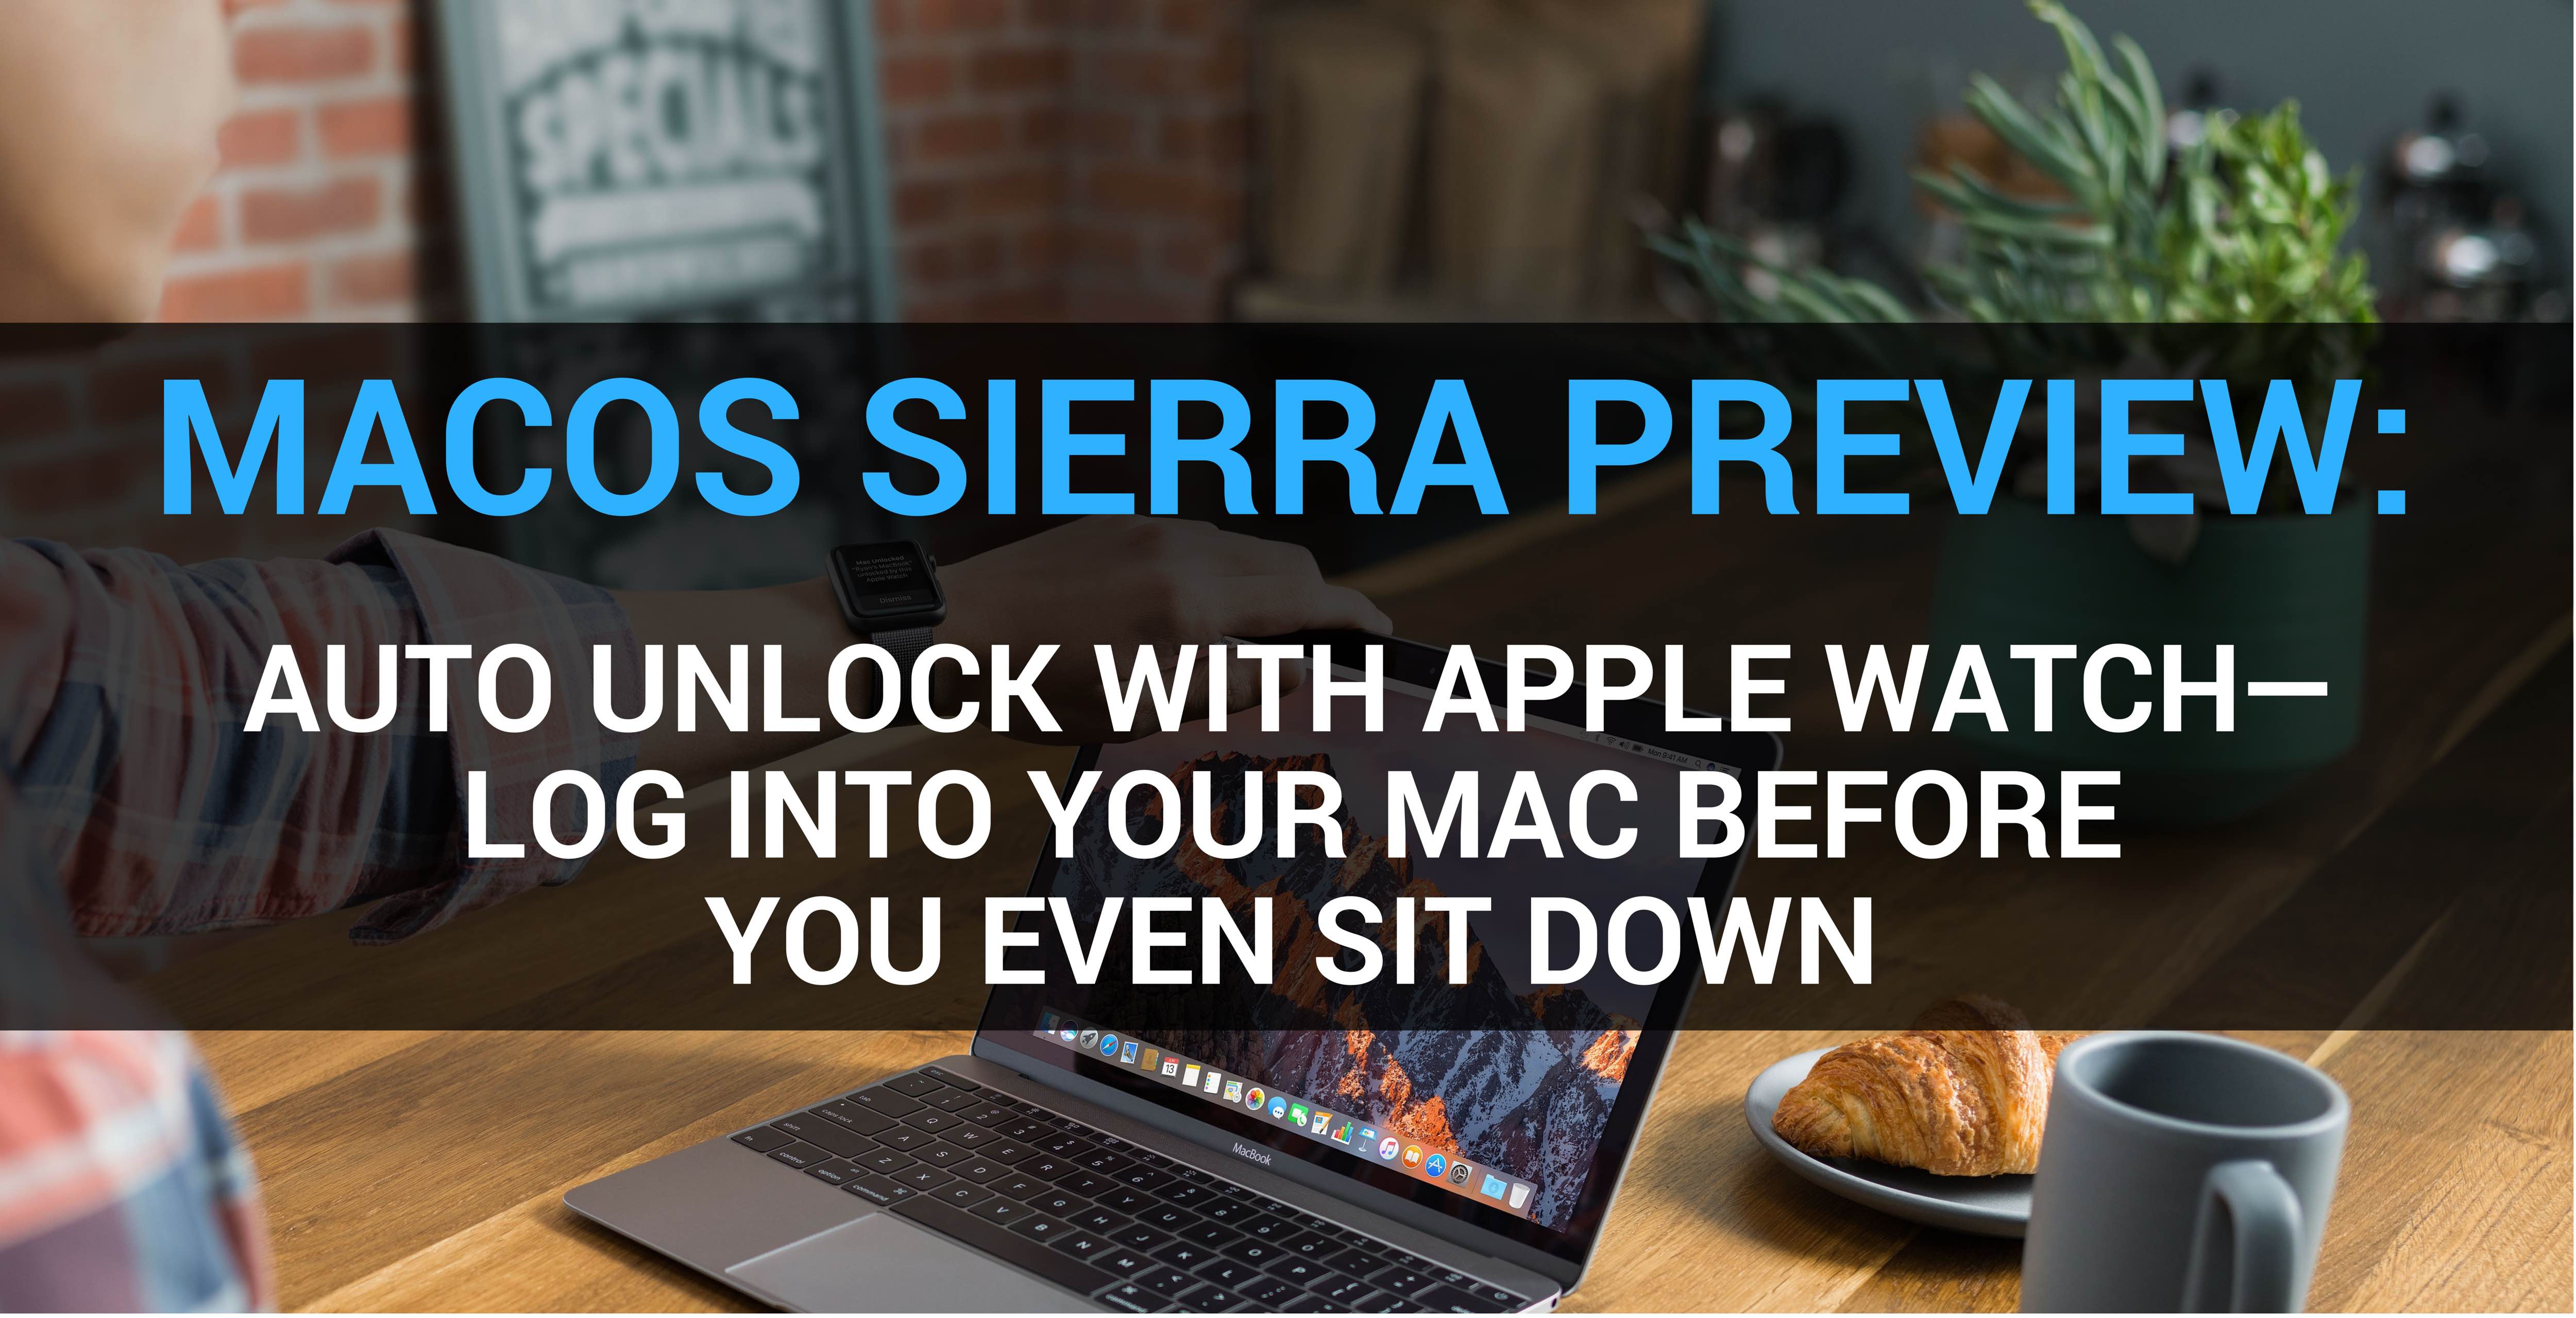 macOS Sierra Preview Auto Unlock teaser 001